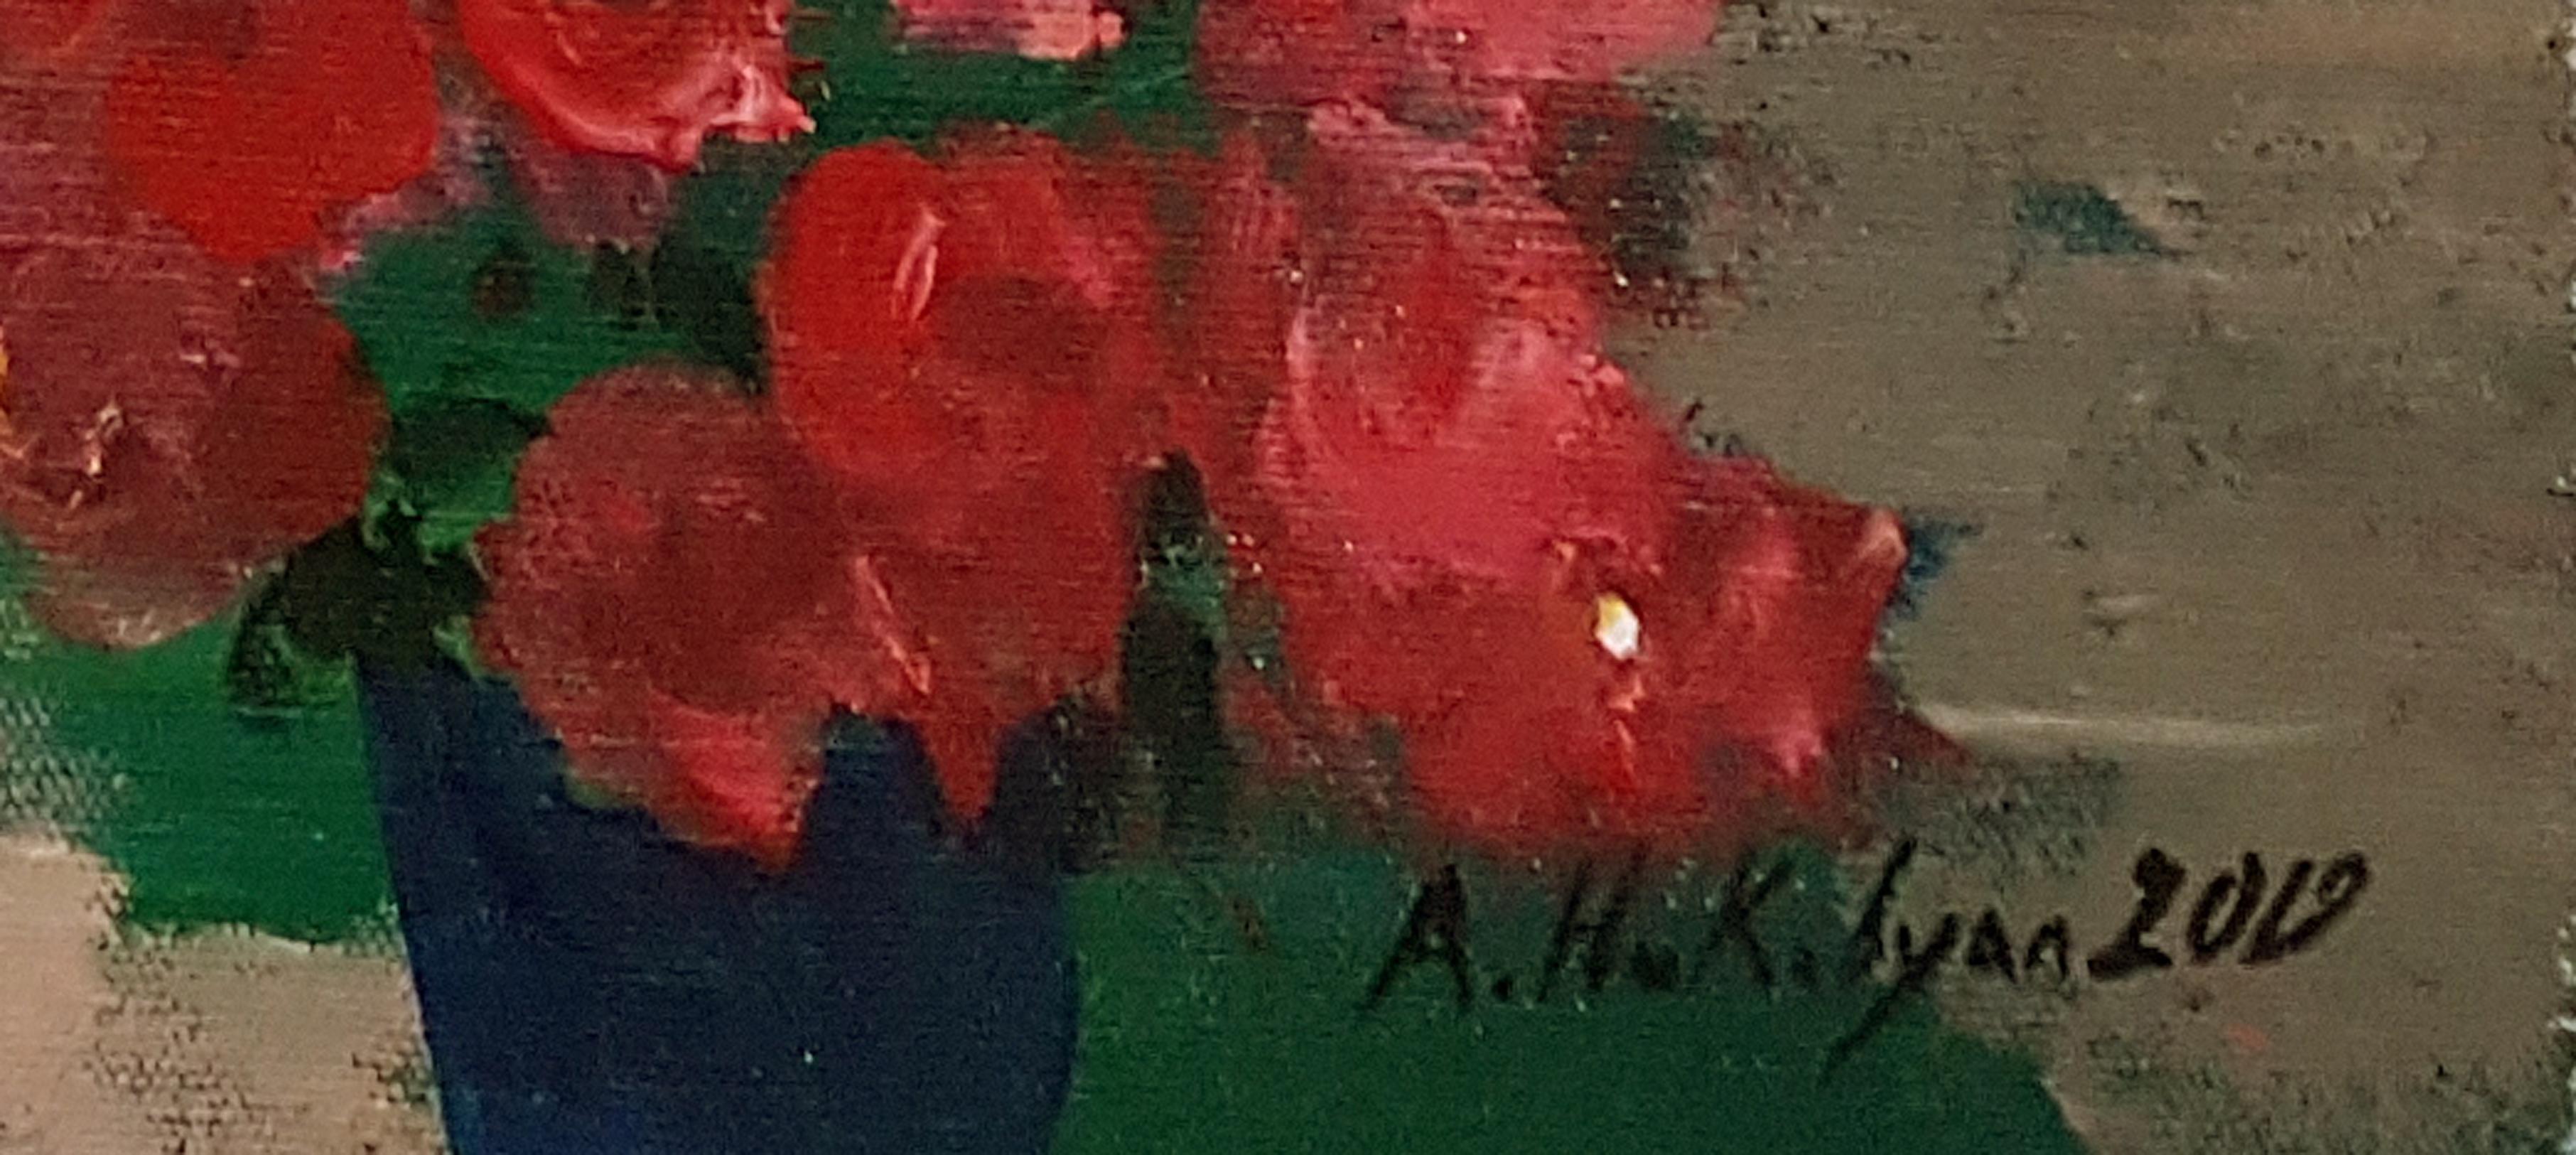 Artist: Ara H. Hakobyan
Work: Original Painting, Handmade Artwork, One of a Kind
Medium: Acrylic on Canvas
Year: 2019
Style: Impressionism
Title: Flower Sellers
Size: 16